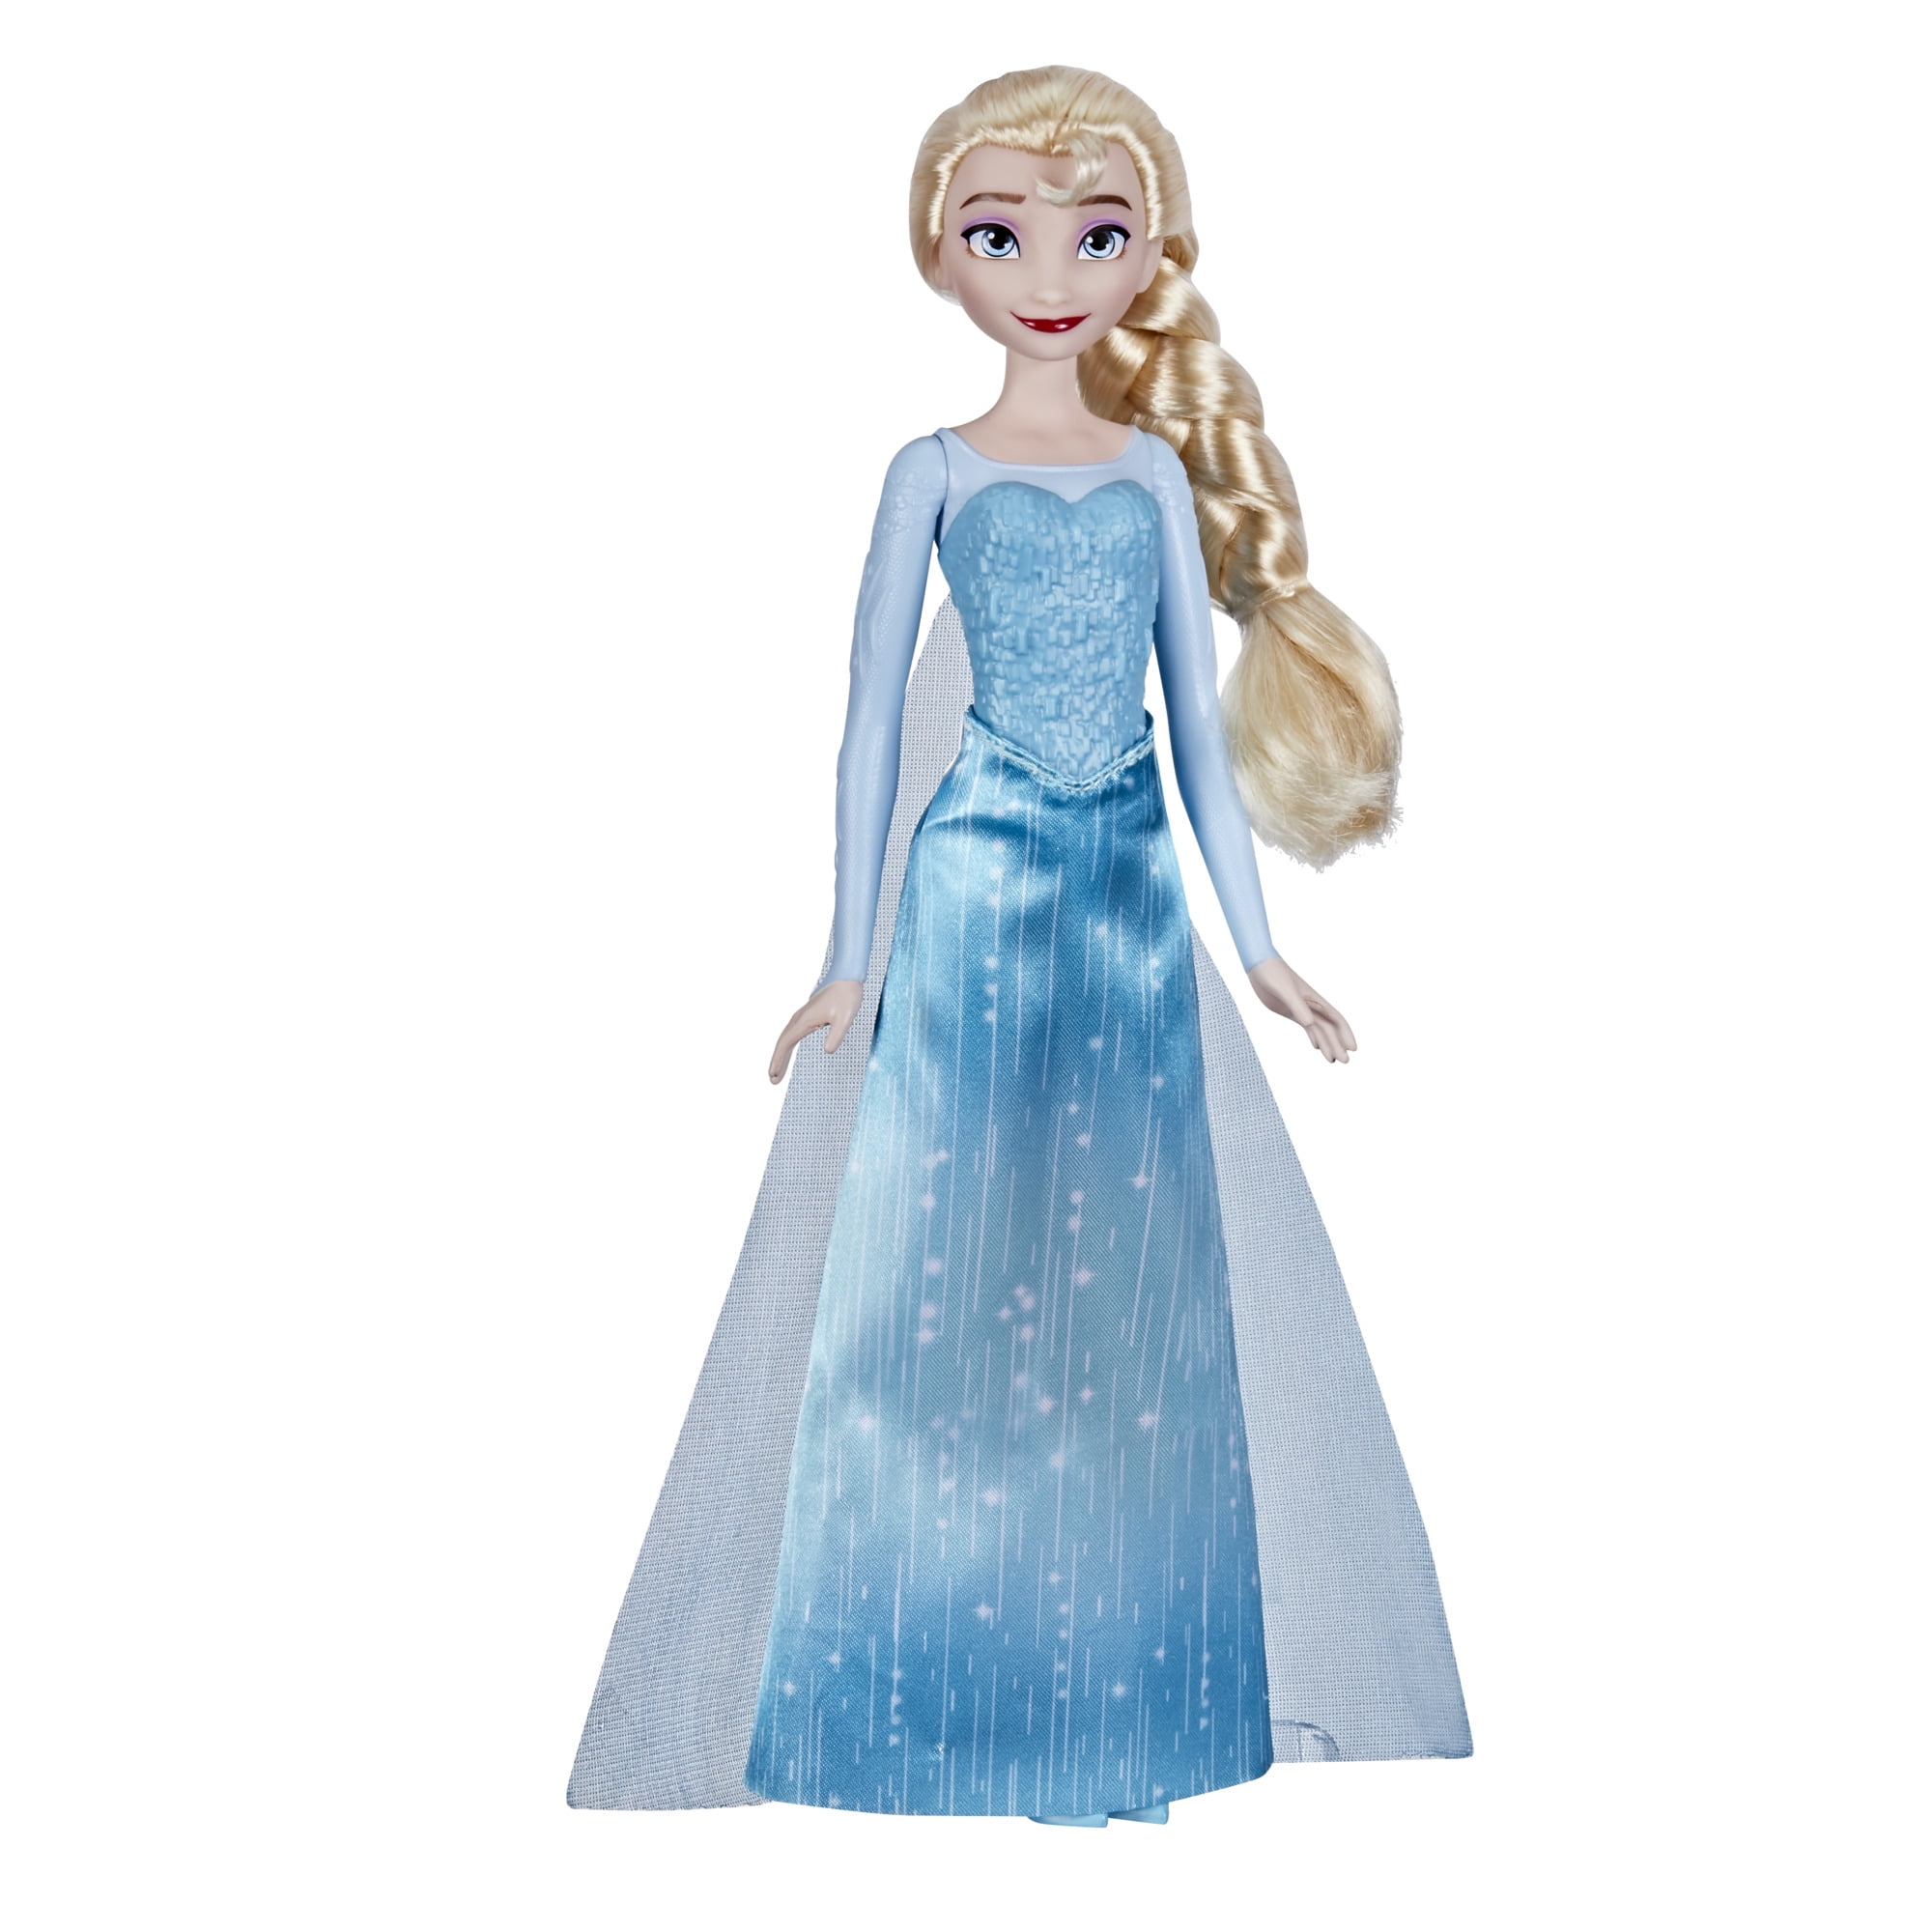 Toy Disney Frozen 2 Sister Styles Long Red Blonde Hair Elsa Anna Fashion Doll 5 